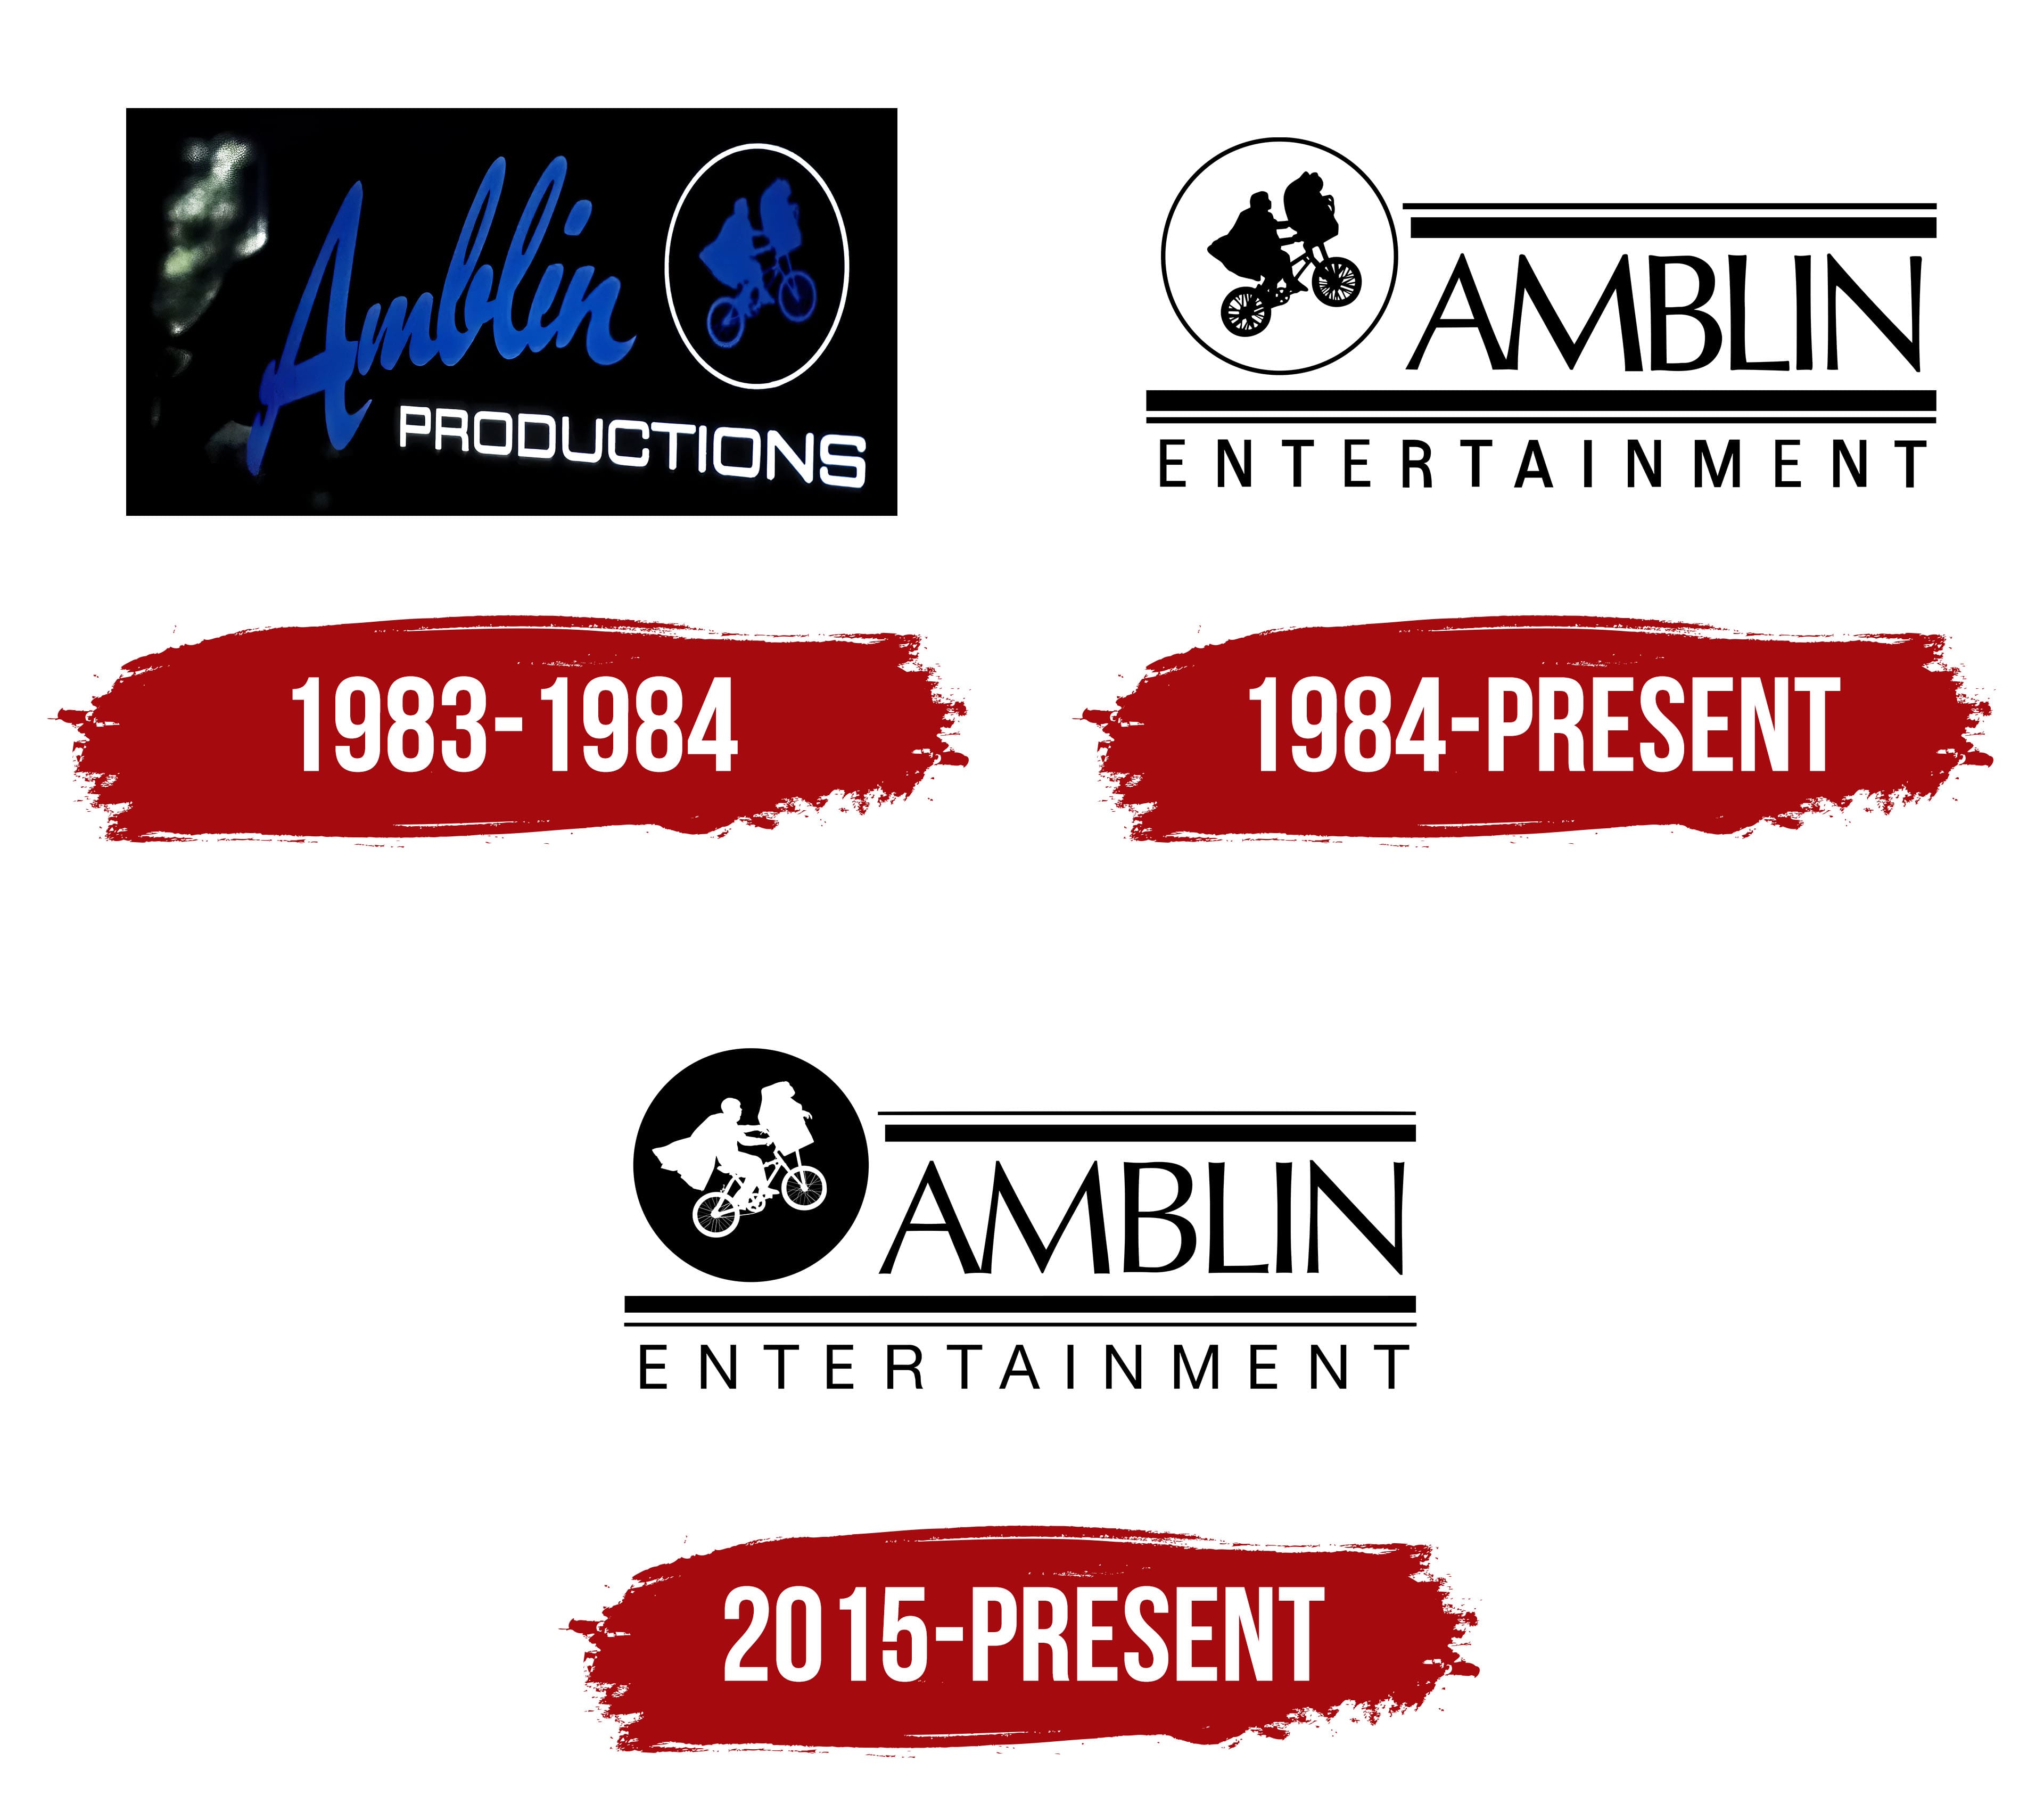 Amblin Entertainment Logo, symbol, meaning, history, PNG, brand